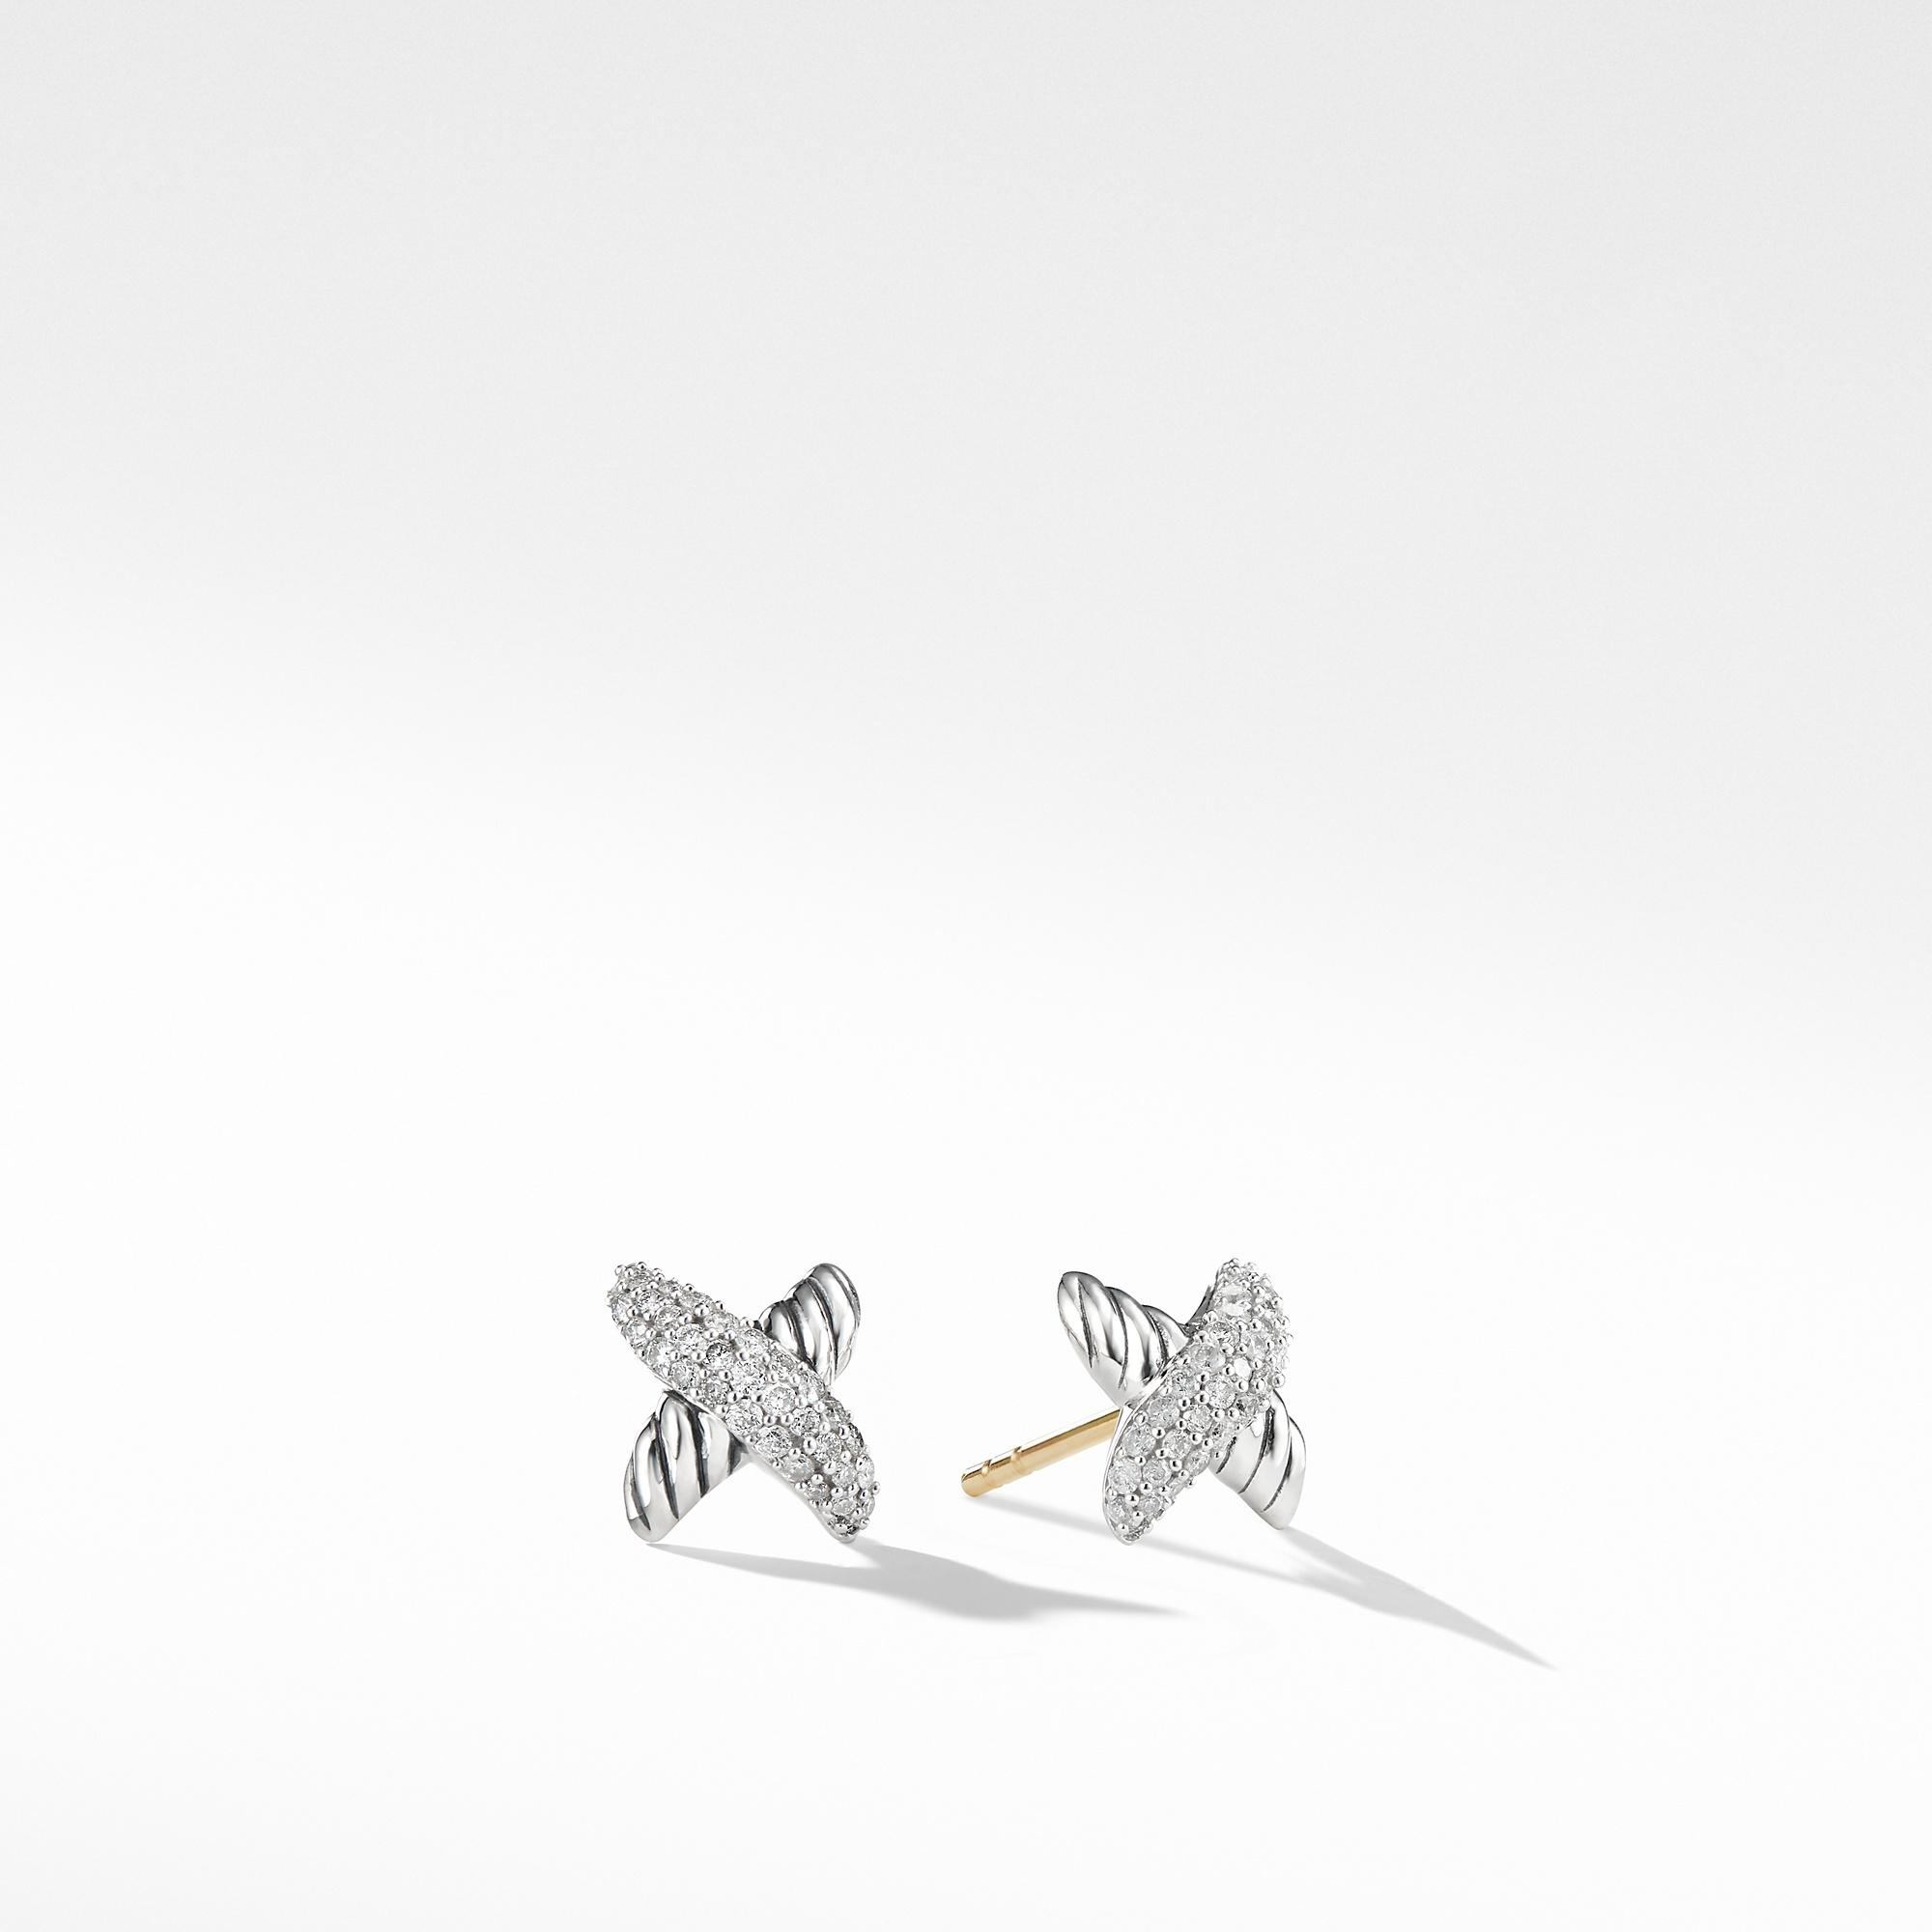 David Yurman X Earrings with Diamonds